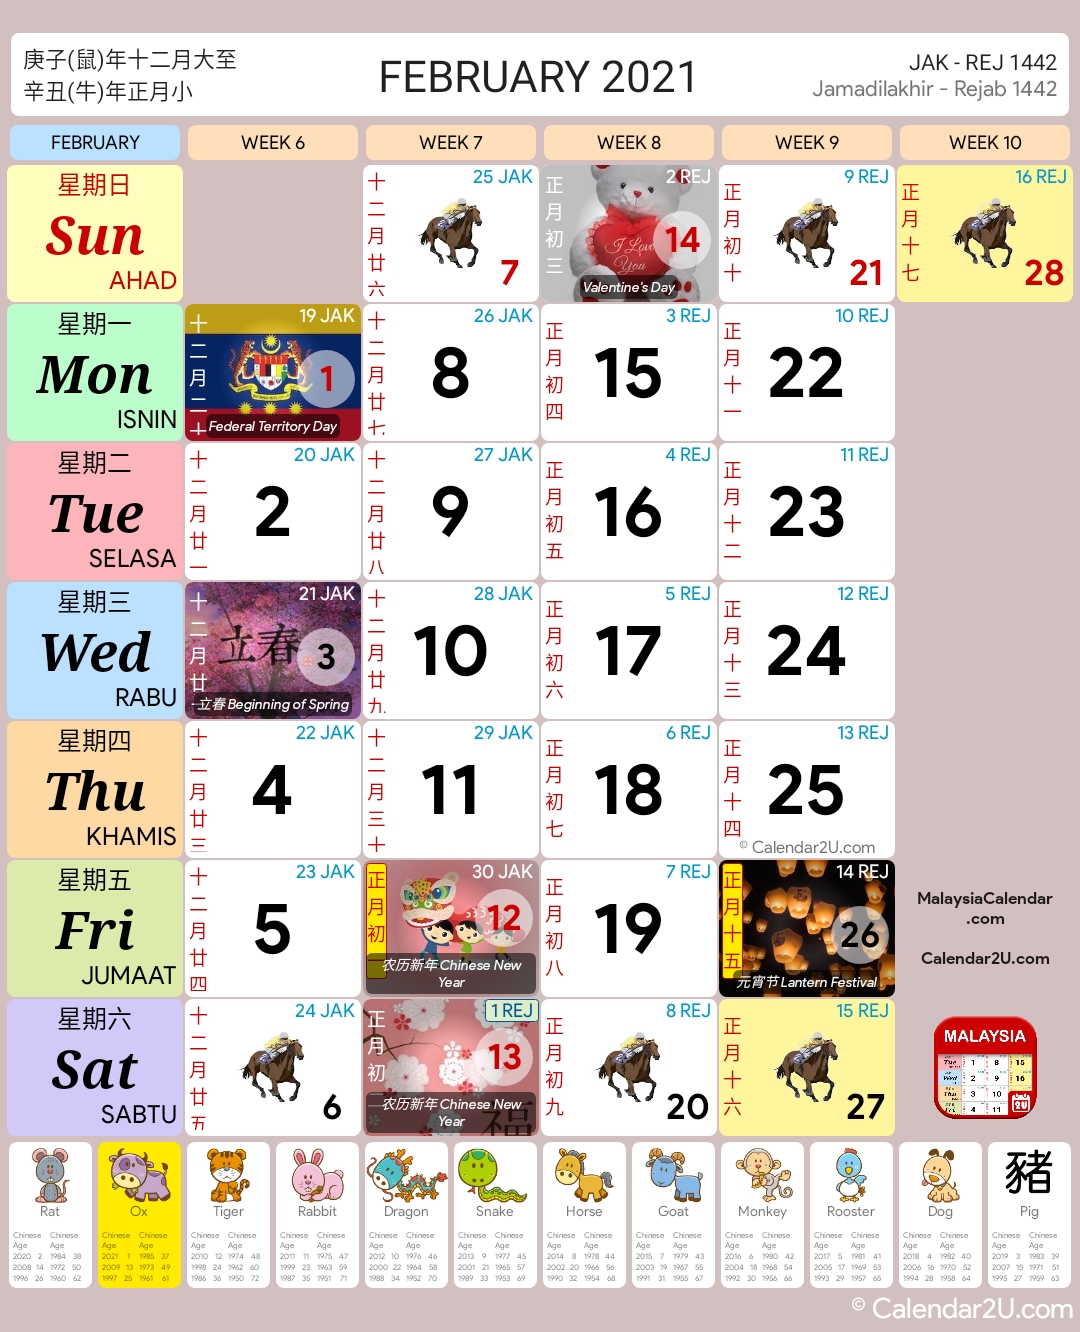 Calendar june 2021 malaysia